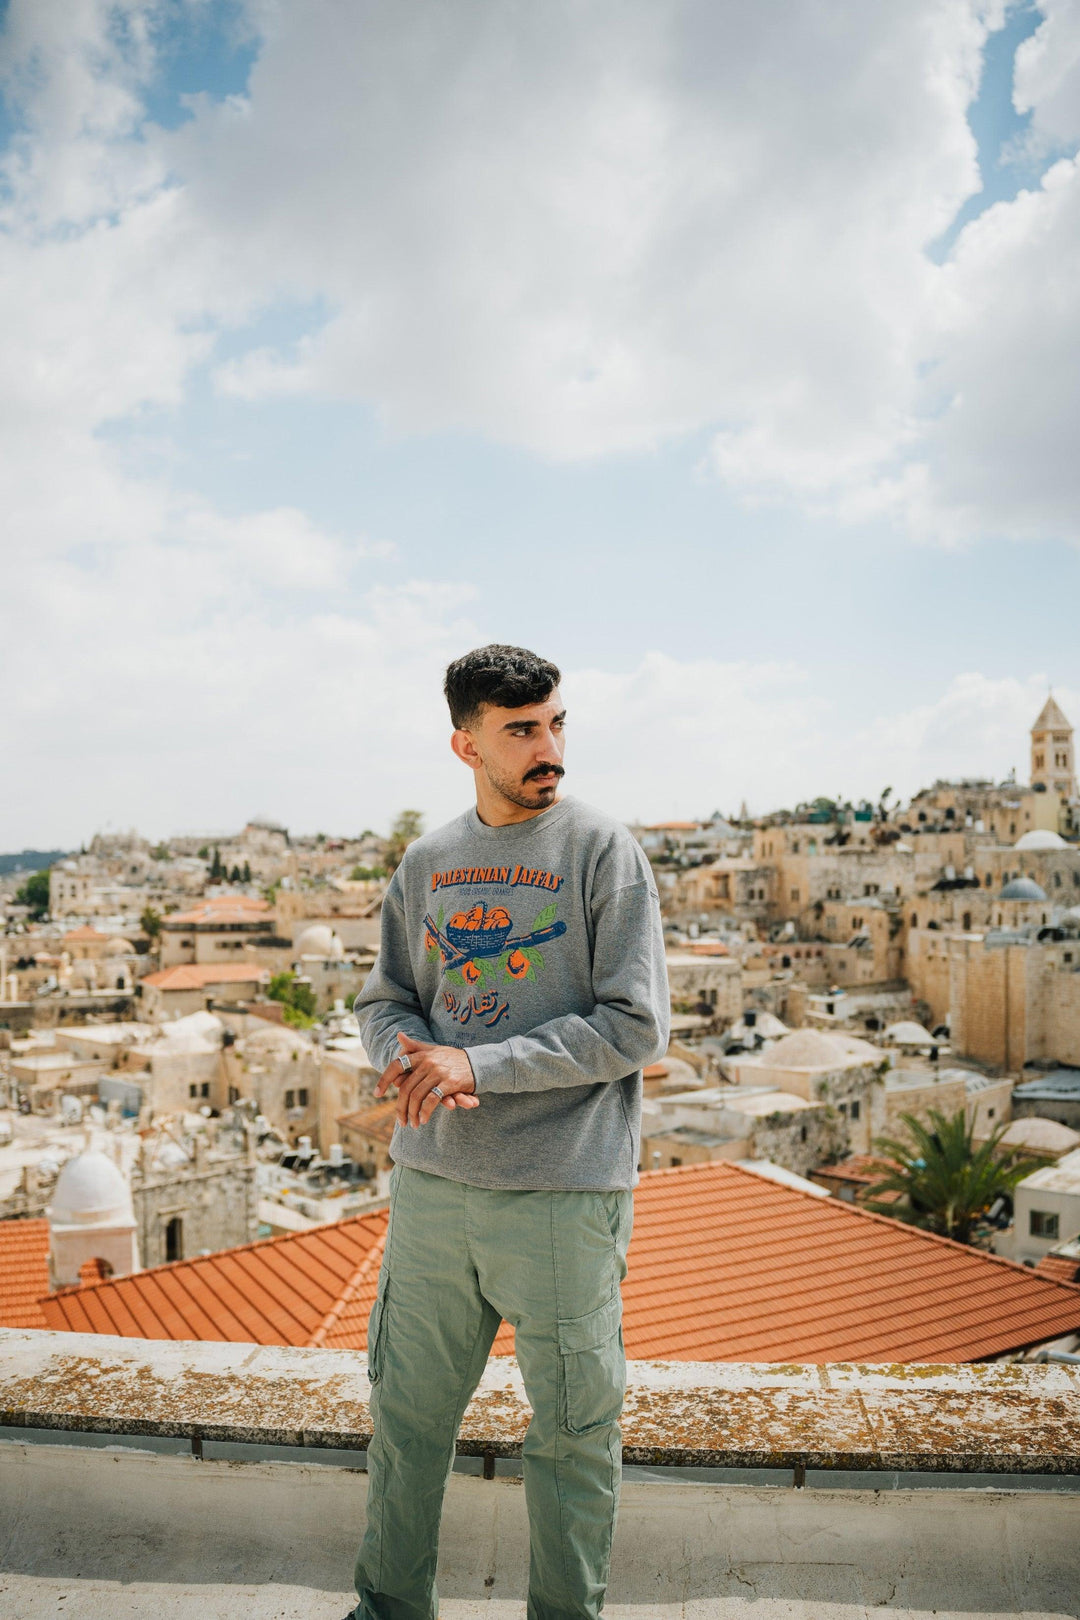 Palestine jaffas sweater clothing